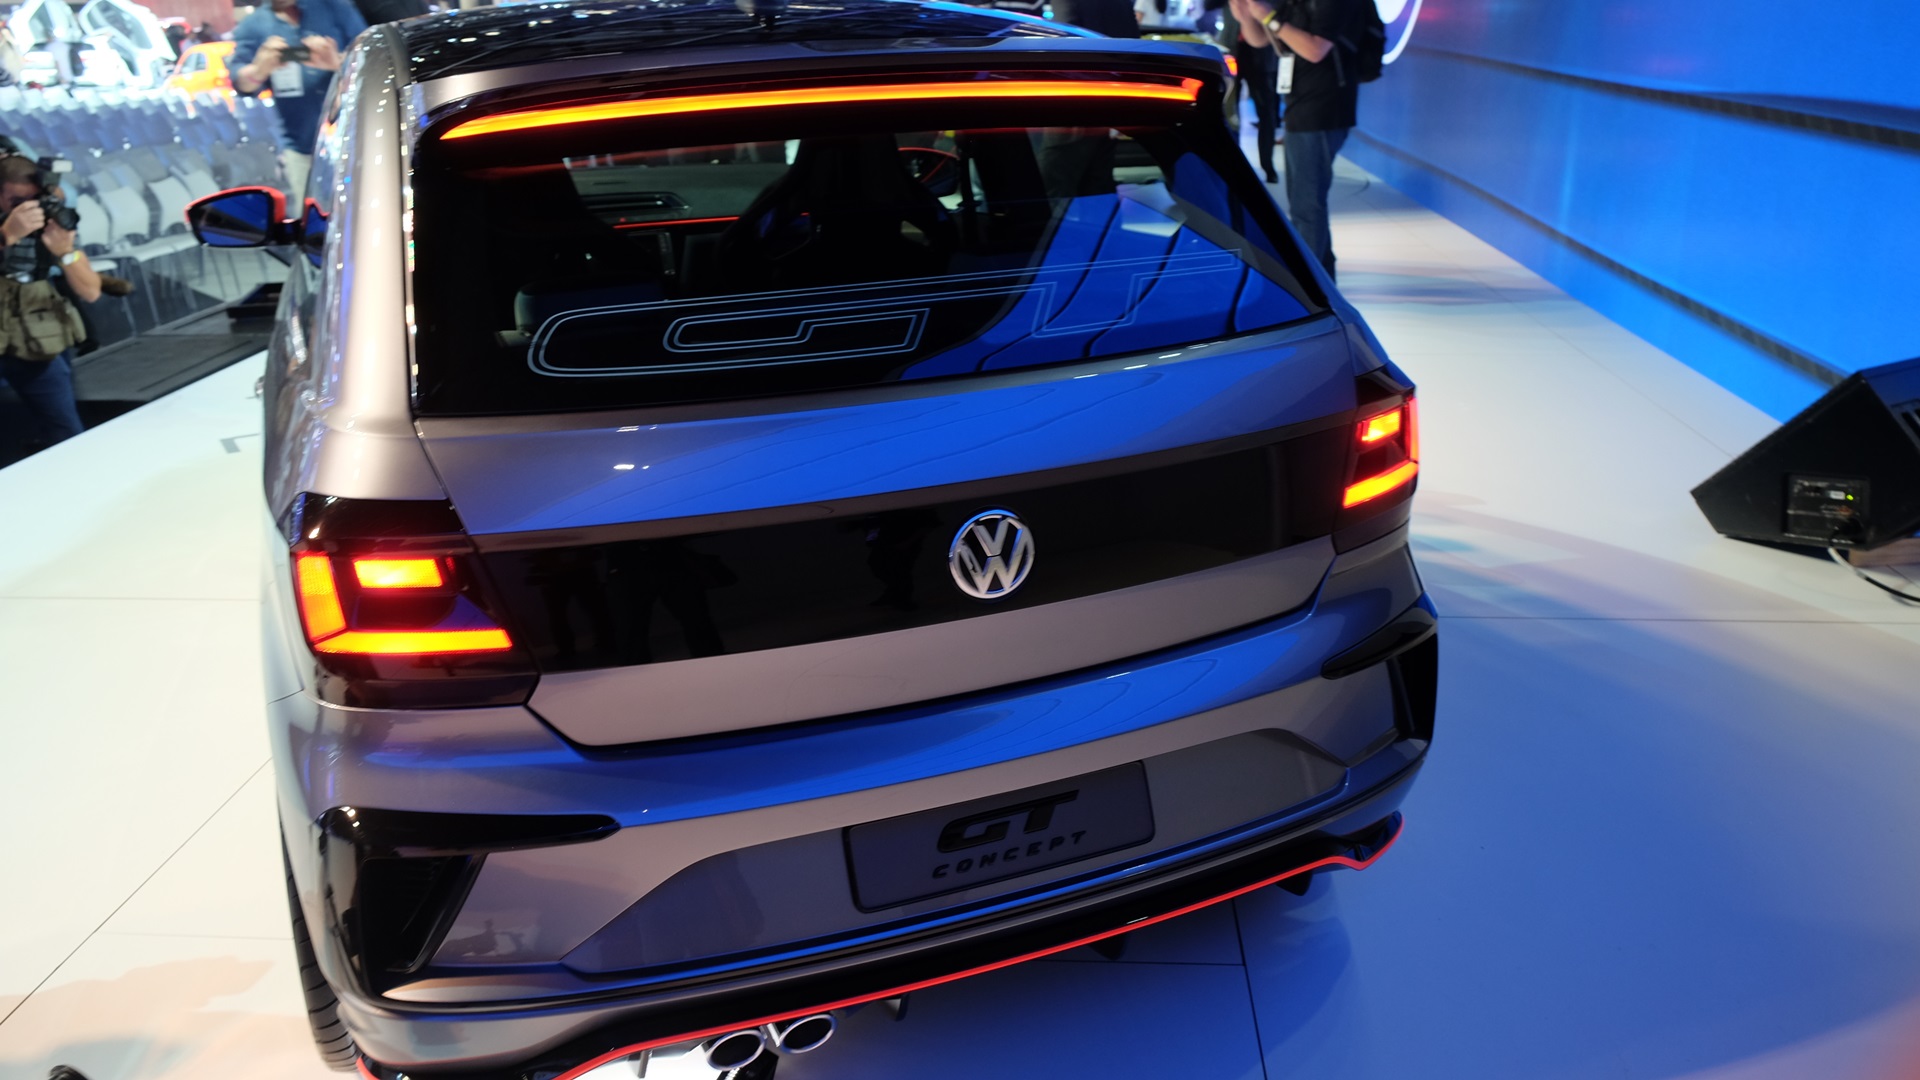 VW Gol GT Concept rear unveiled Brazil